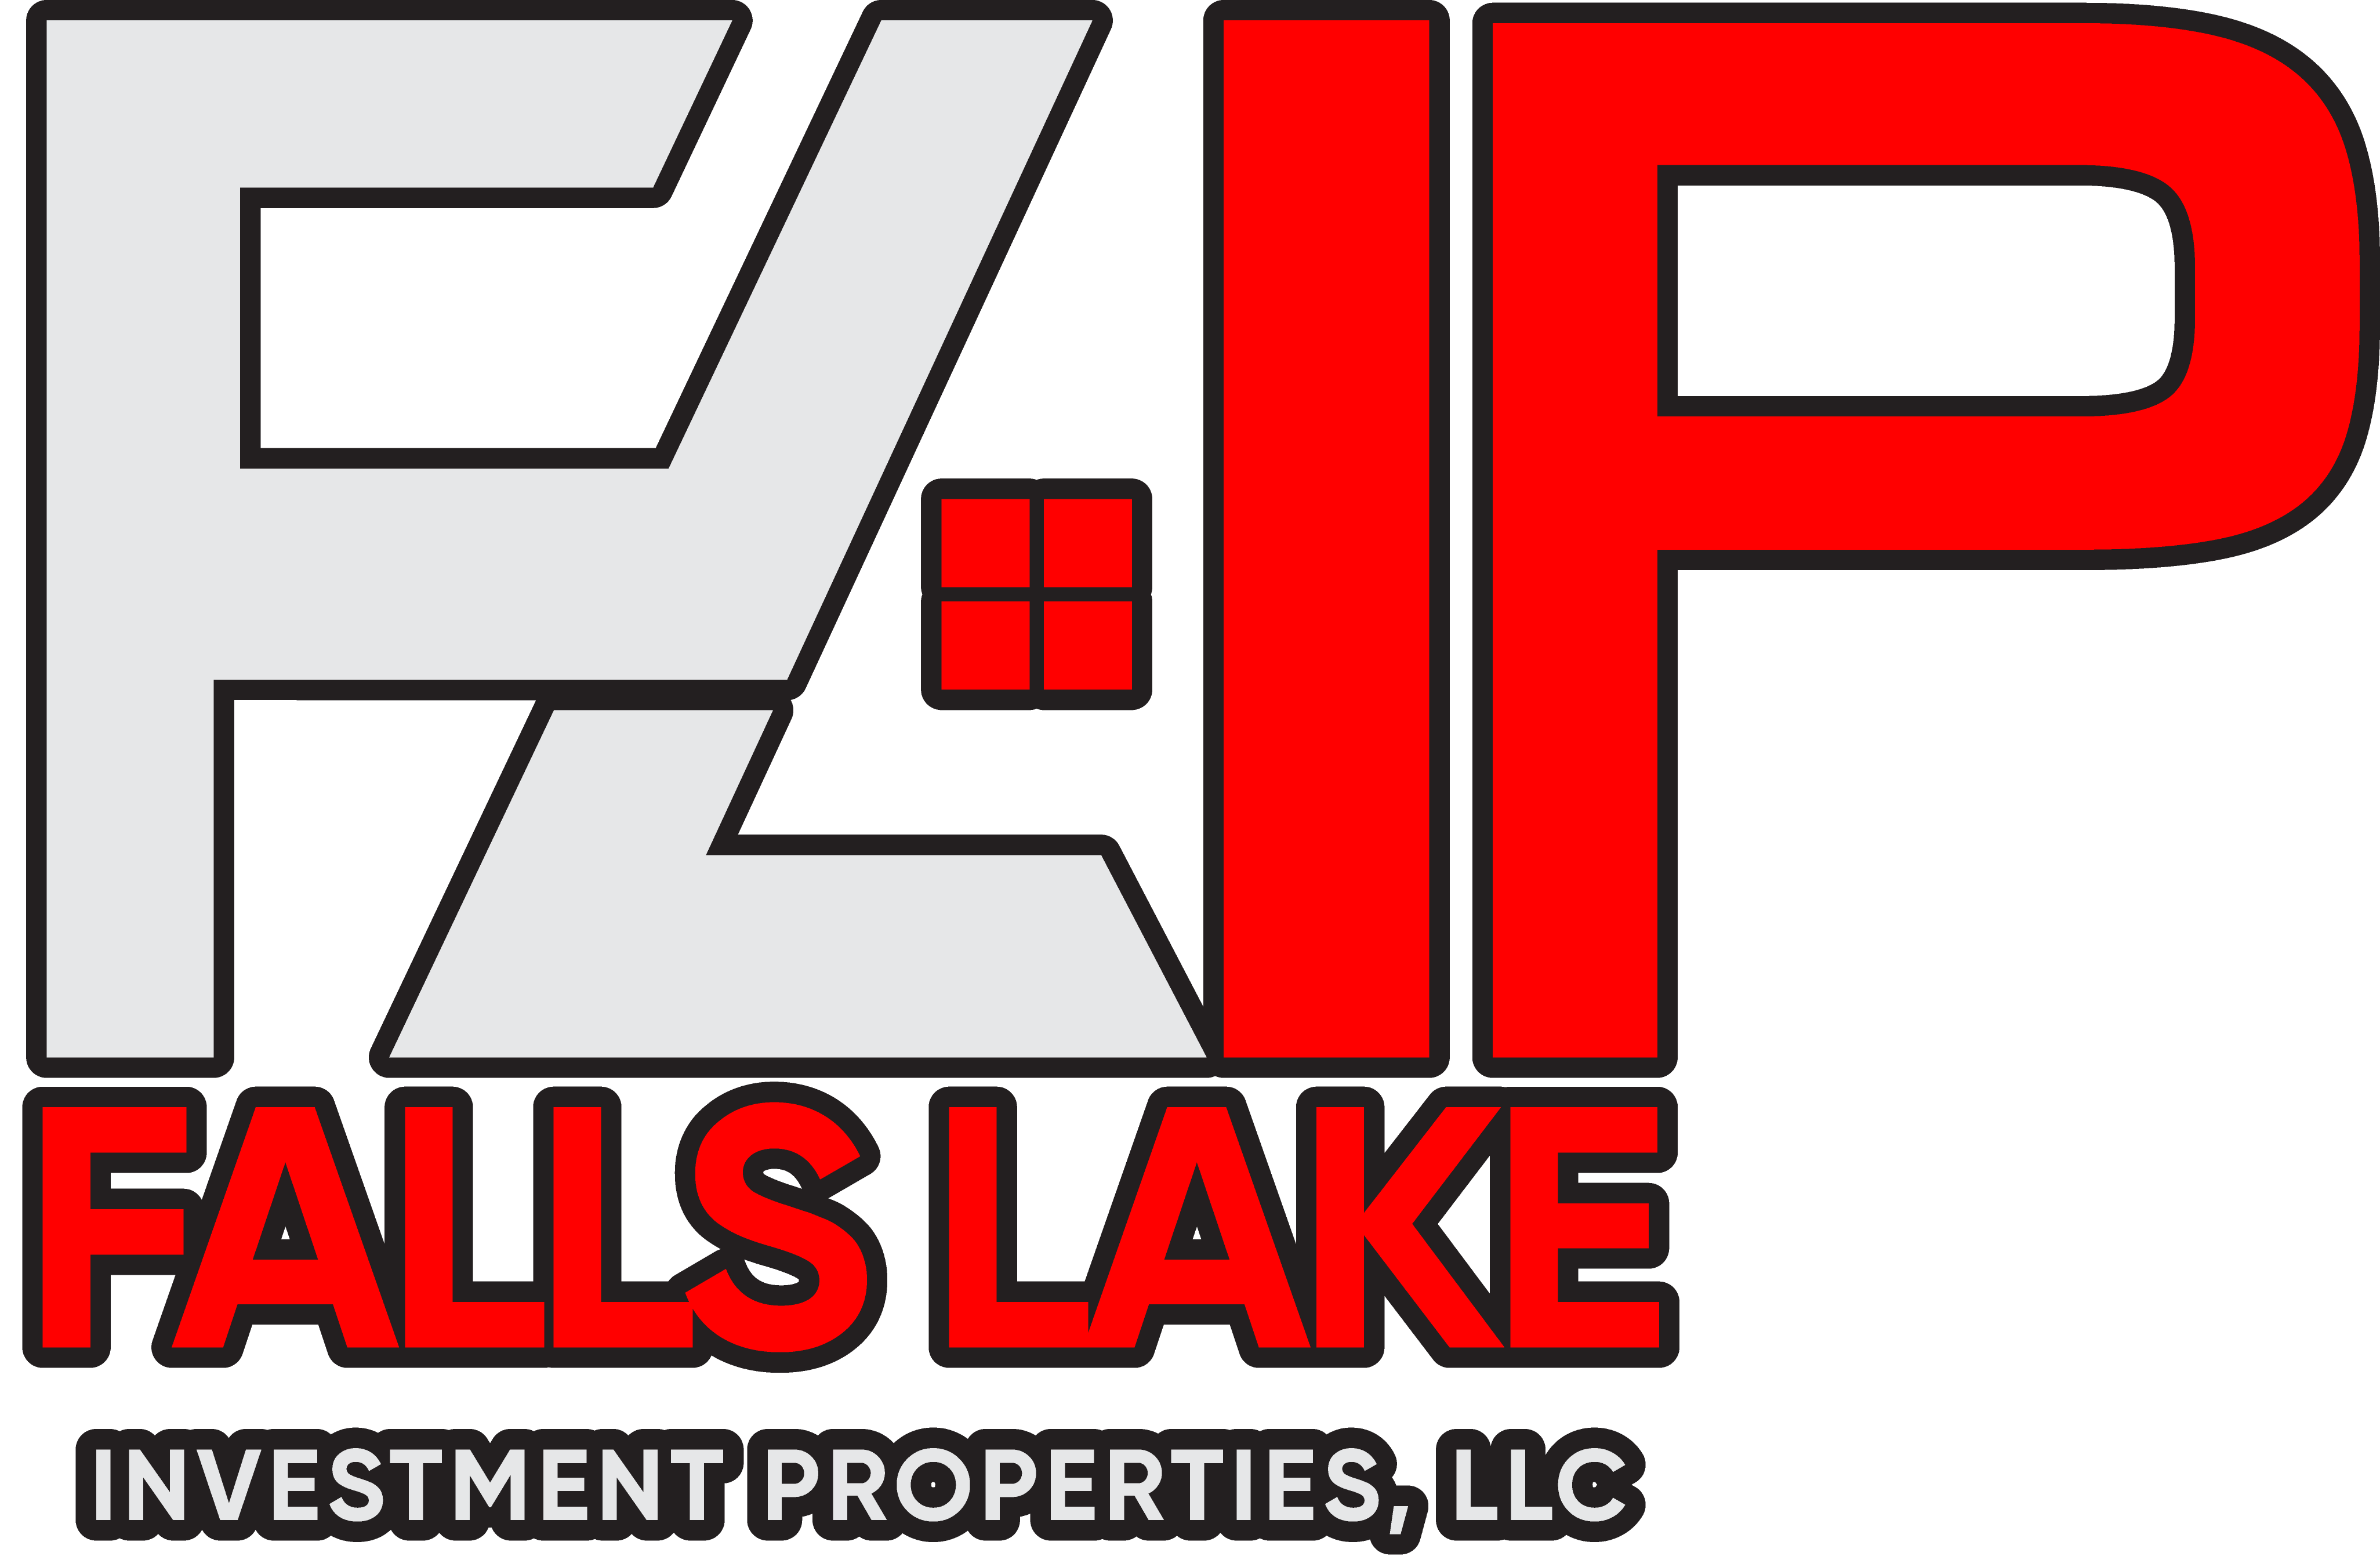 Falls Lake Investment Properties